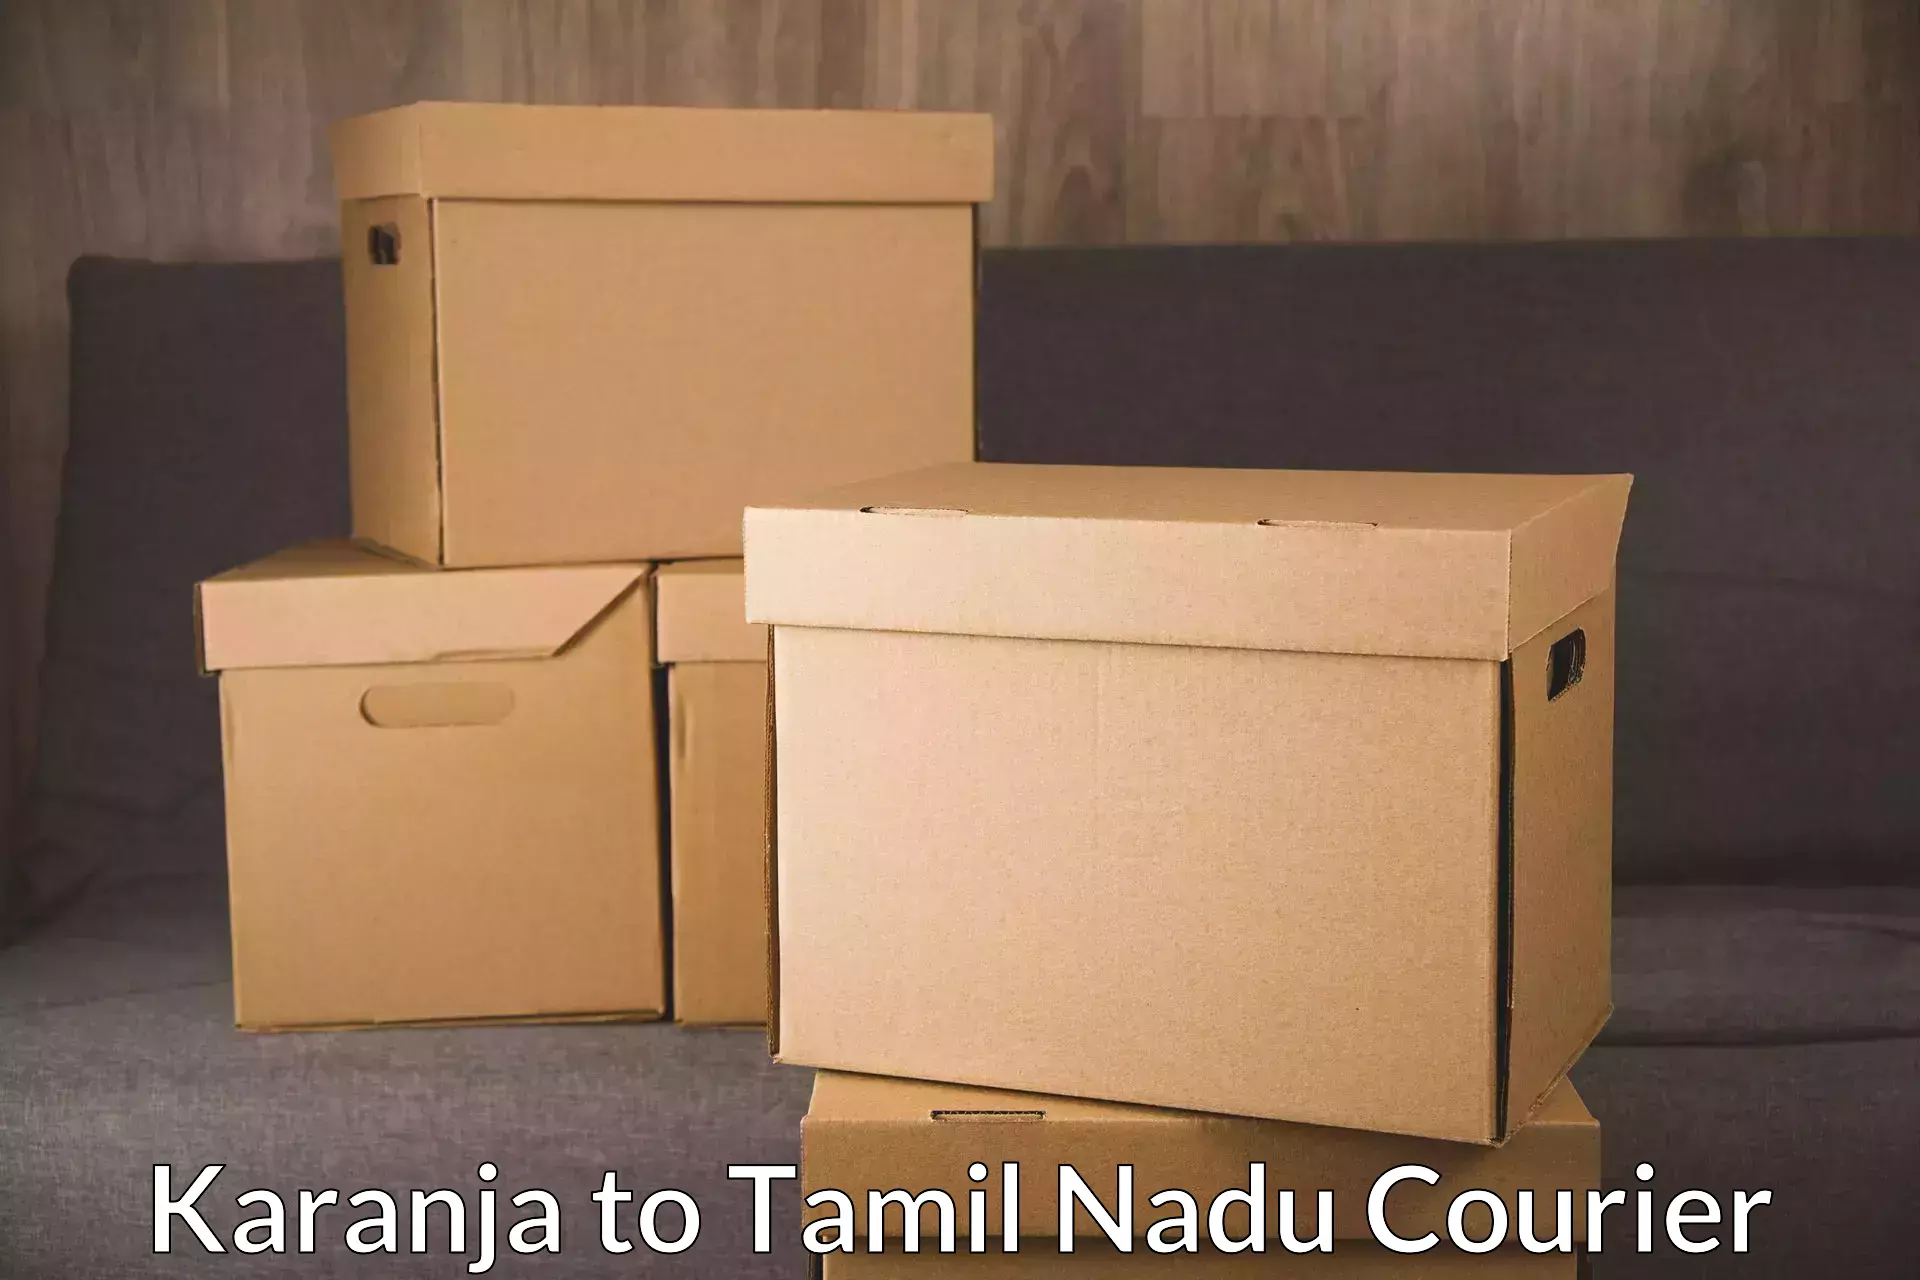 Nationwide courier service Karanja to Tirunelveli